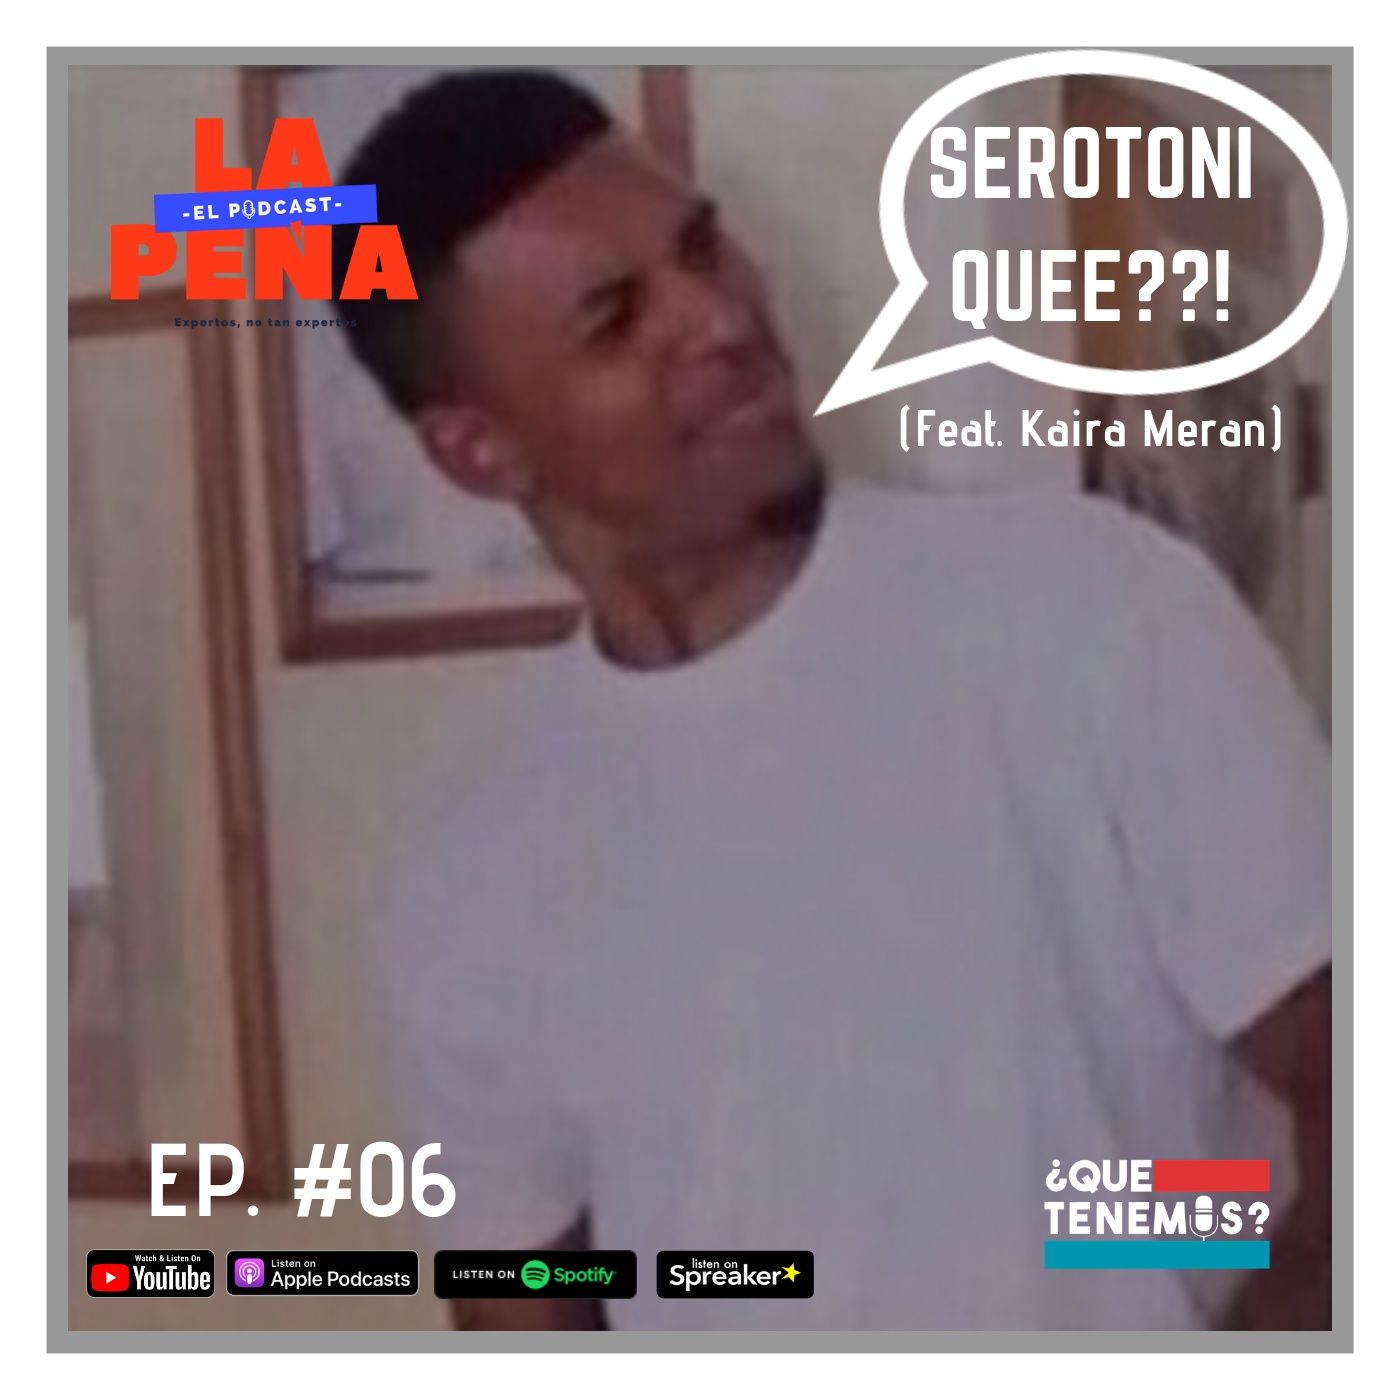 EP #06 - SEROTONIQUEEE?? (Feat. Kaira Meran)